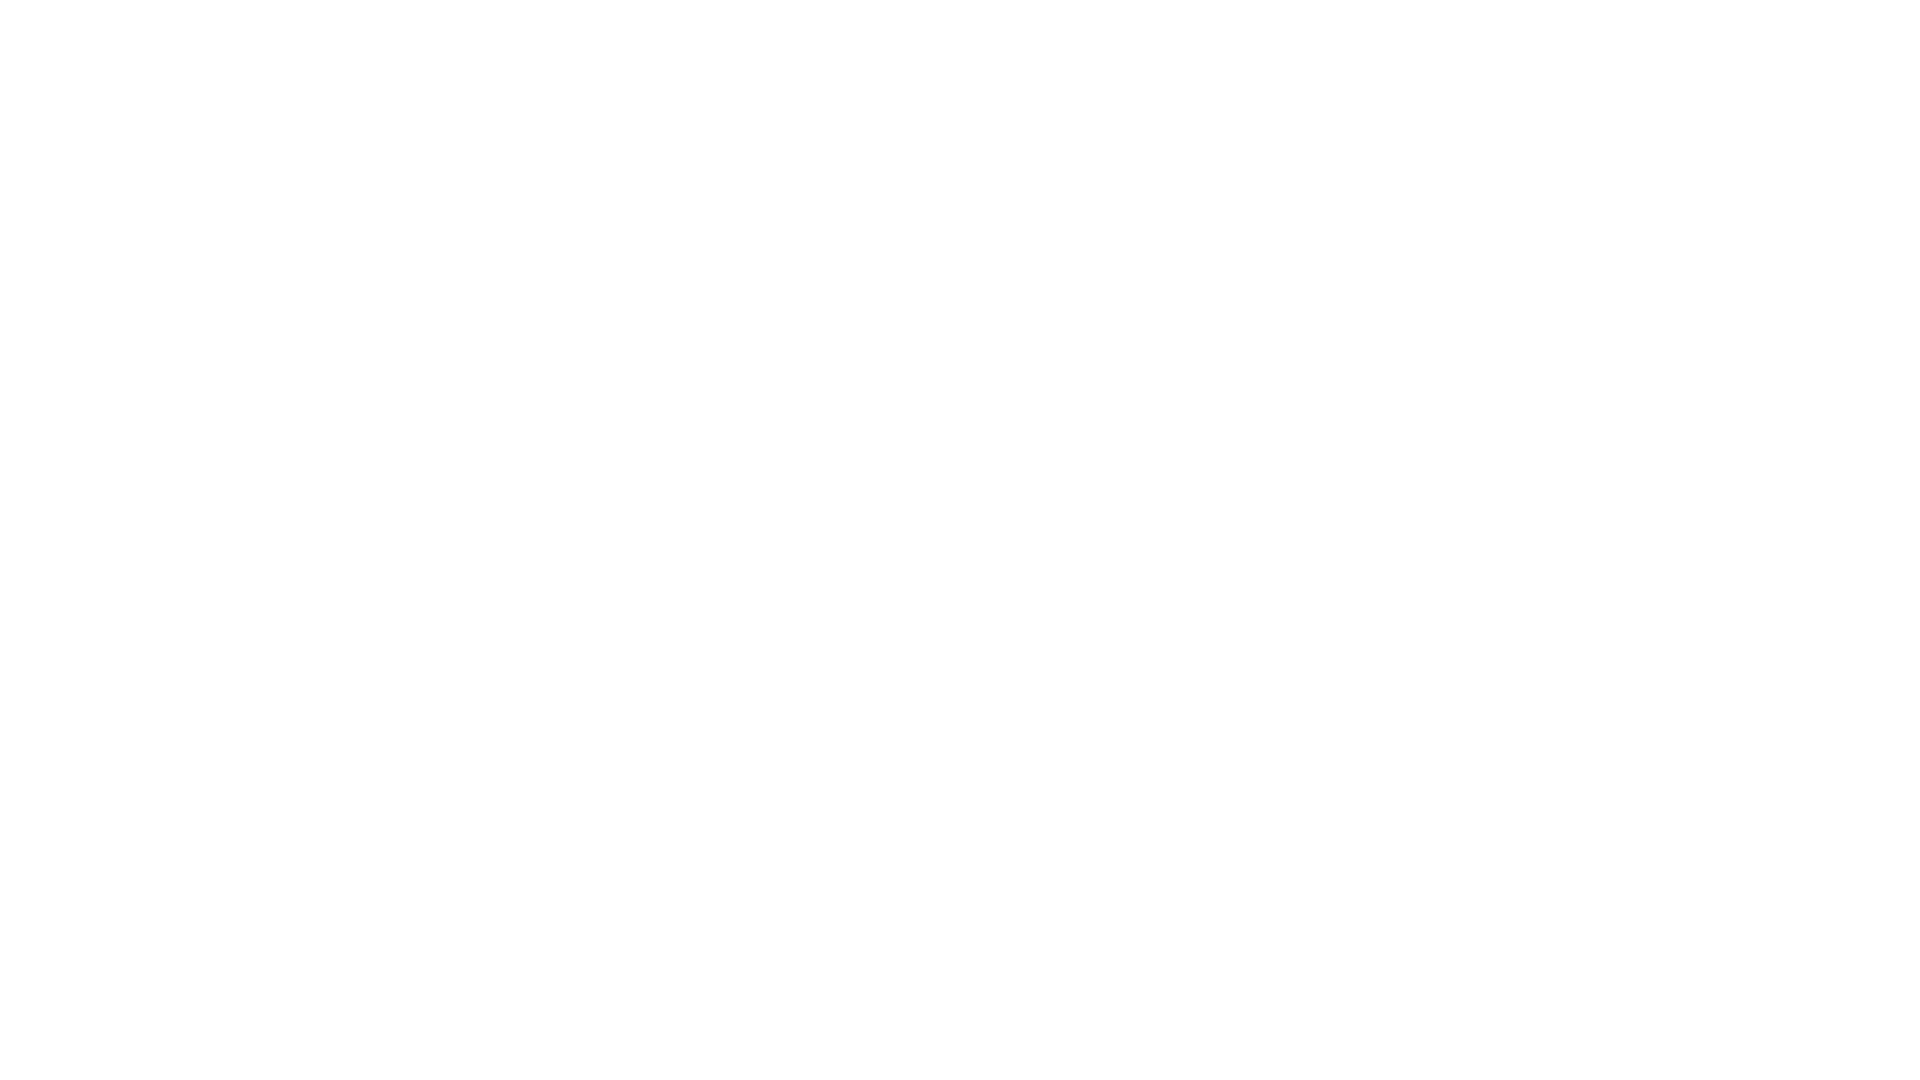 Teahouse Design Studio